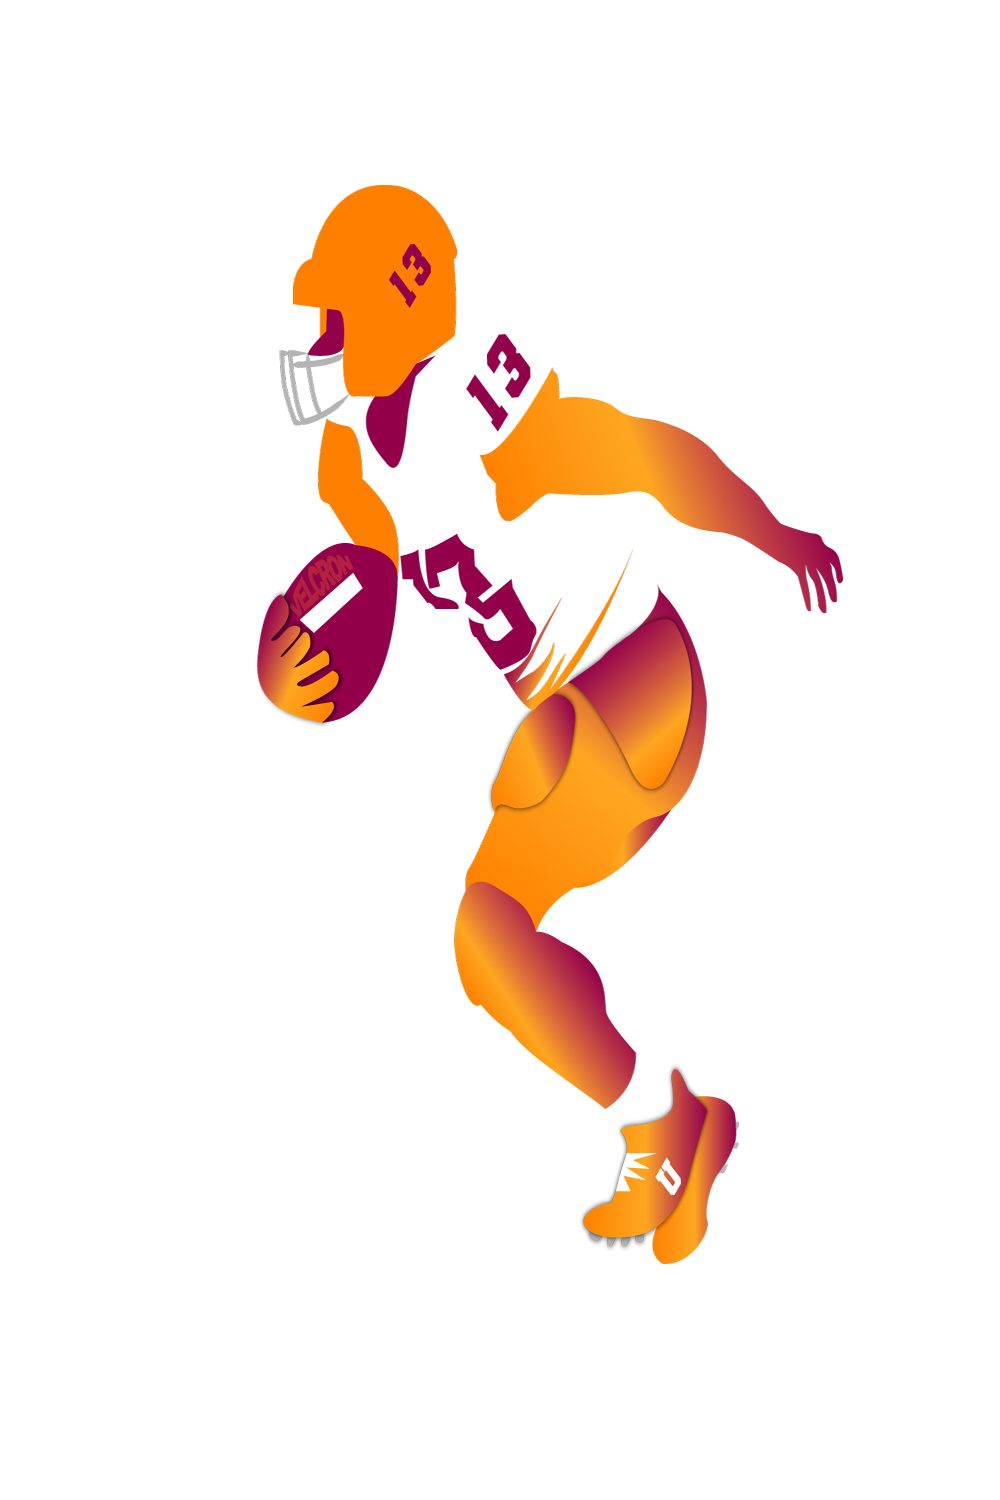 American Footballer in Action - TShirt Print Design pinterest preview image.